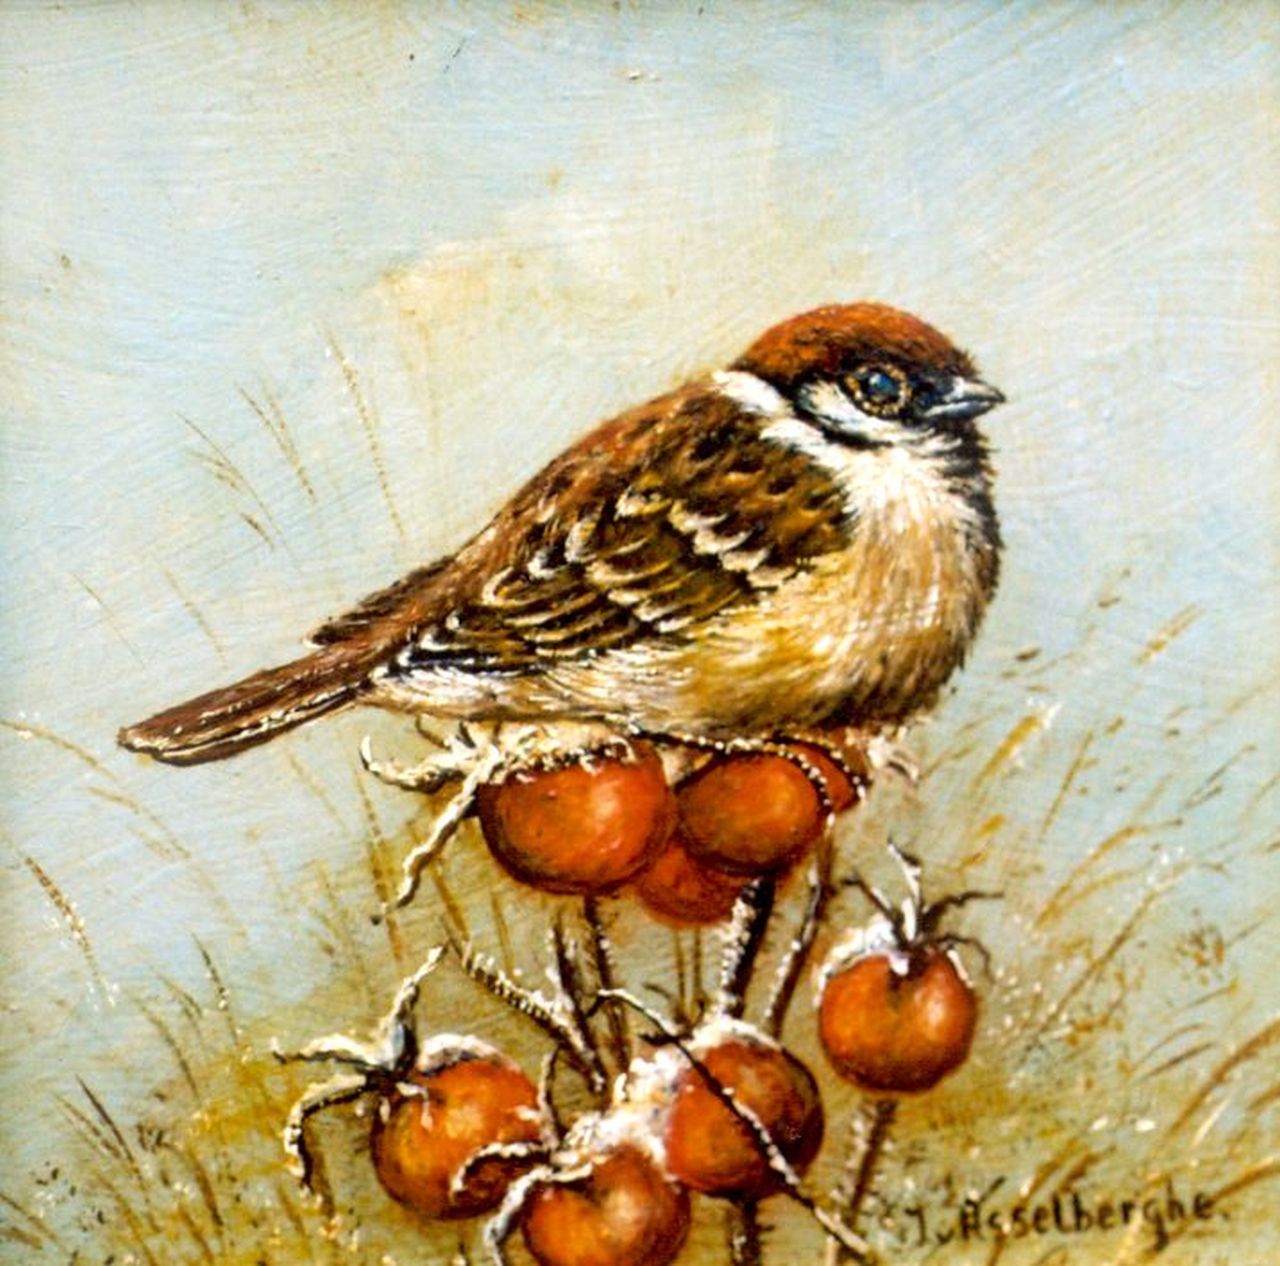 Asselberghe J. van | van Asselberghe, A Tree sparrow, oil on panel 13.0 x 13.0 cm, signed l.r.